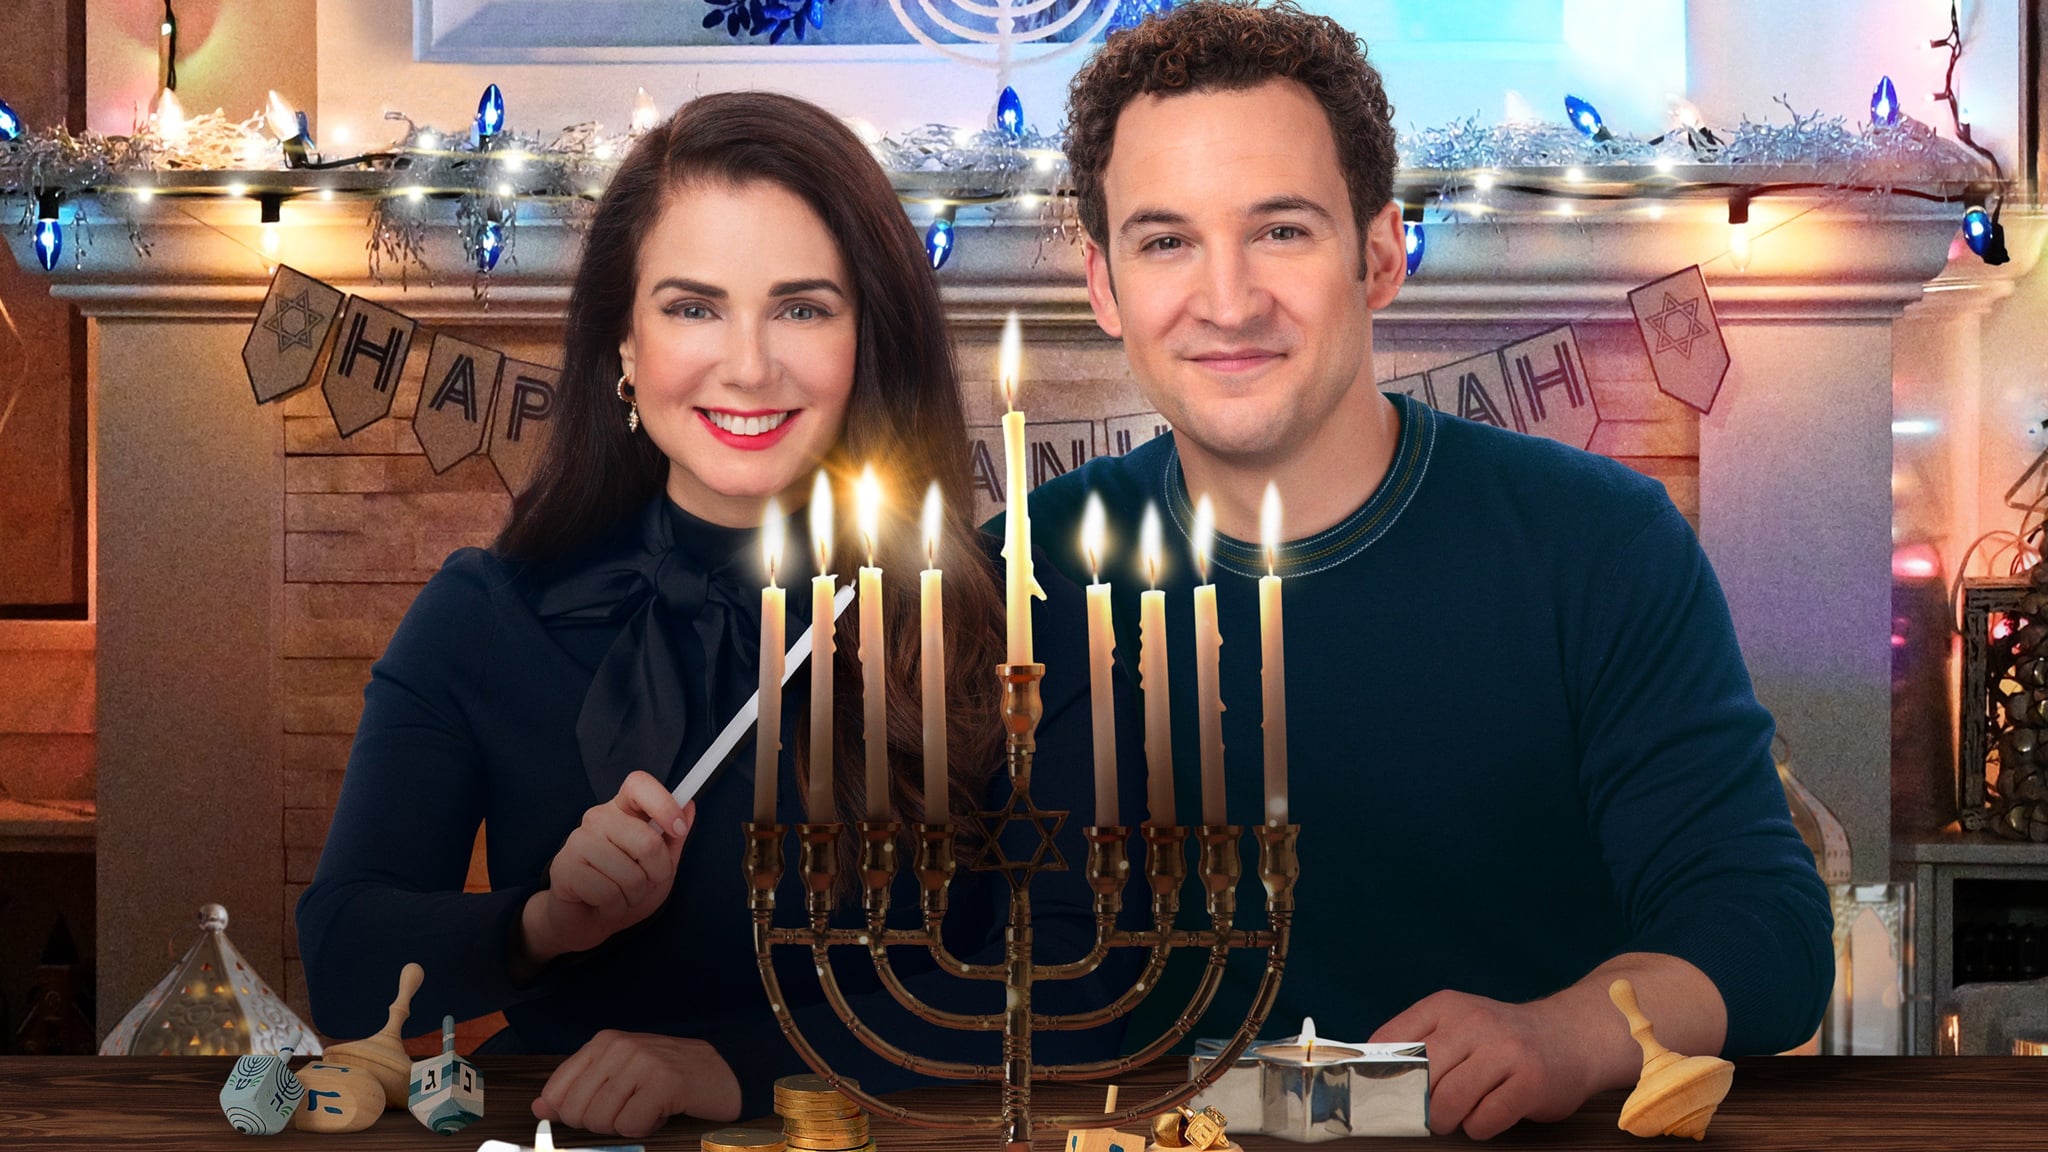 Amore, luci, vacanze! - Love, Lights, Hanukkah!